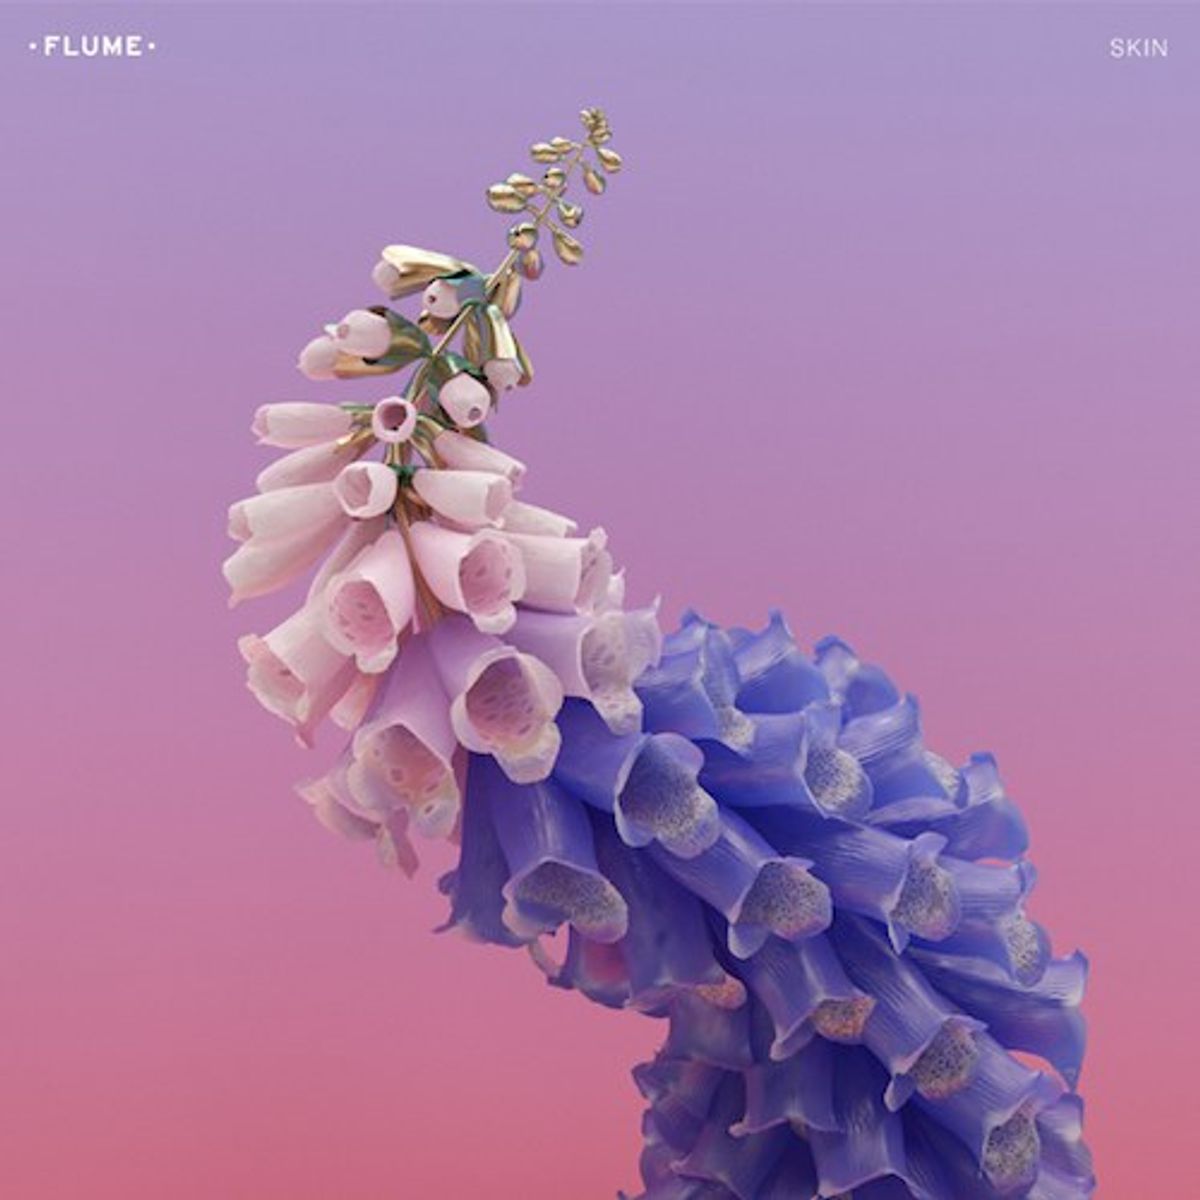 Album Review: Flume - "Skin"